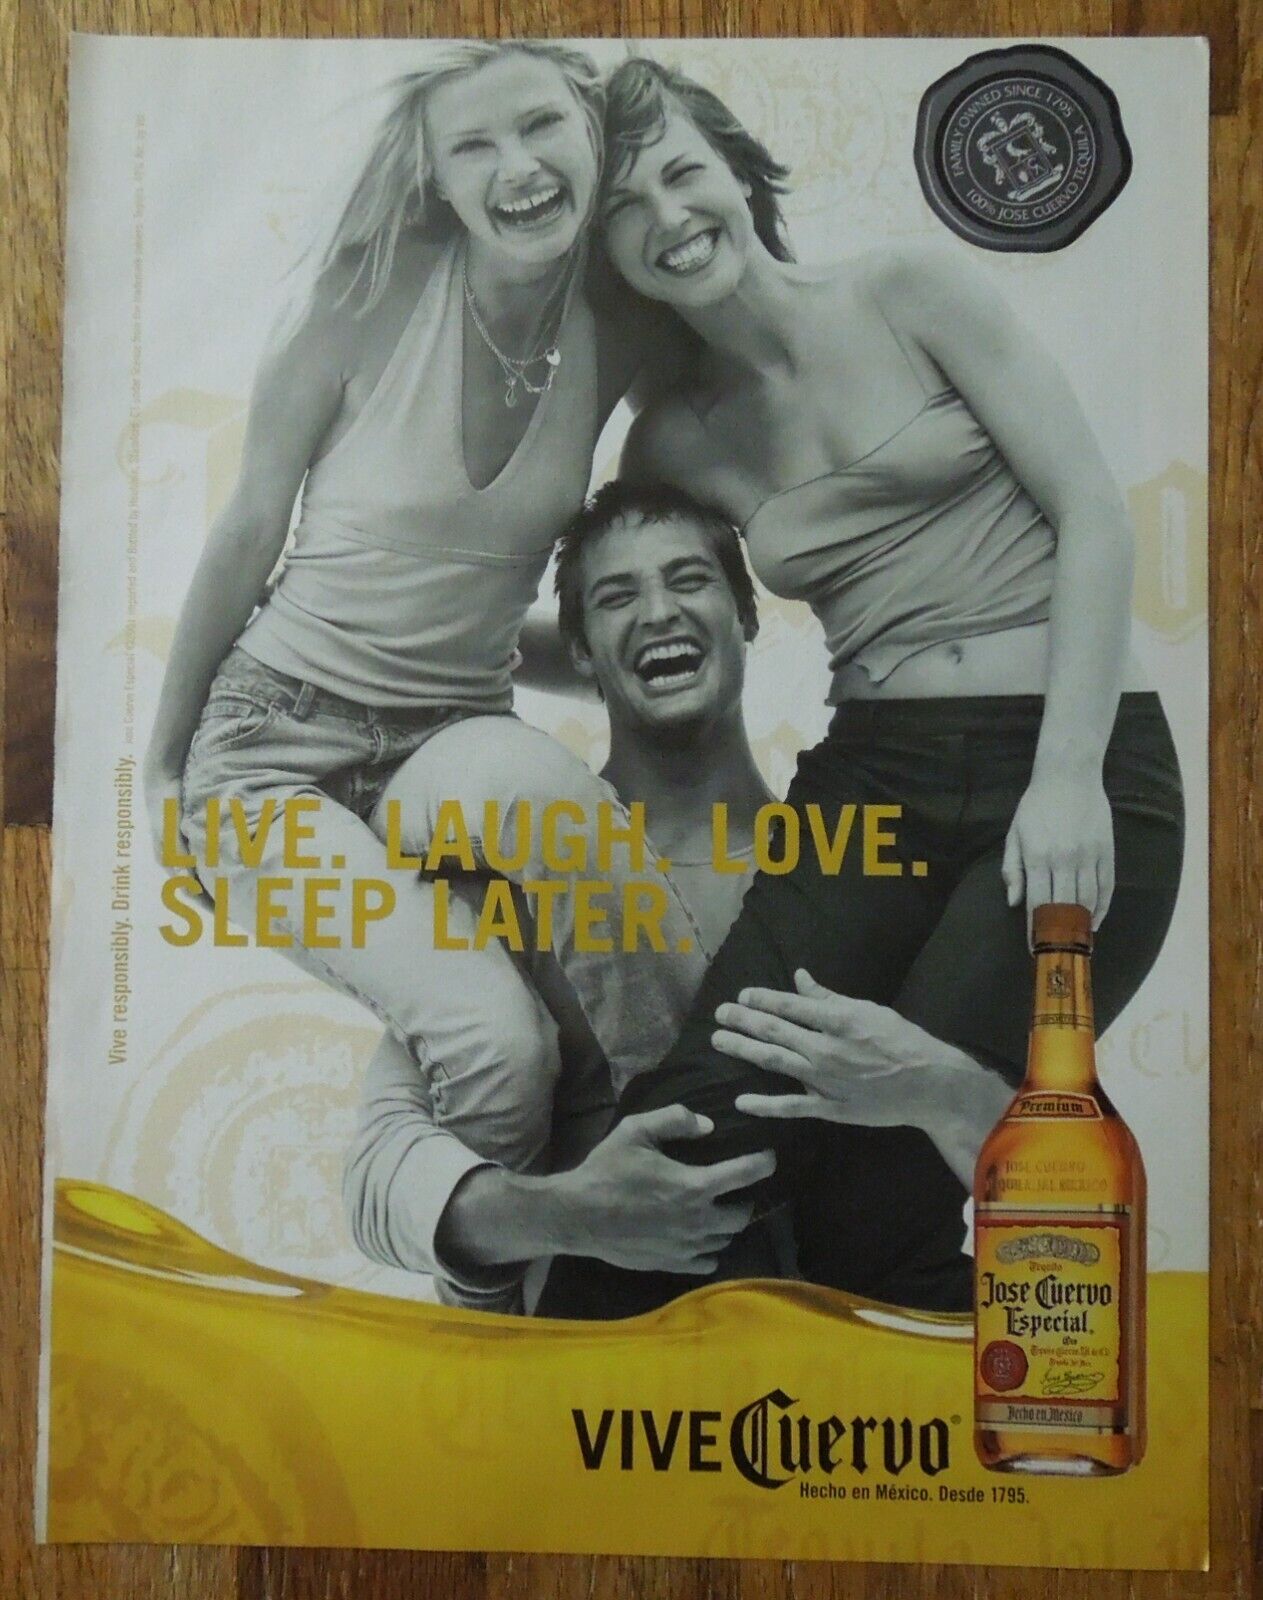 2001 JOSE CUERVO Tequila Magazine Ad - Live. Laugh. Love. Sleep Later.